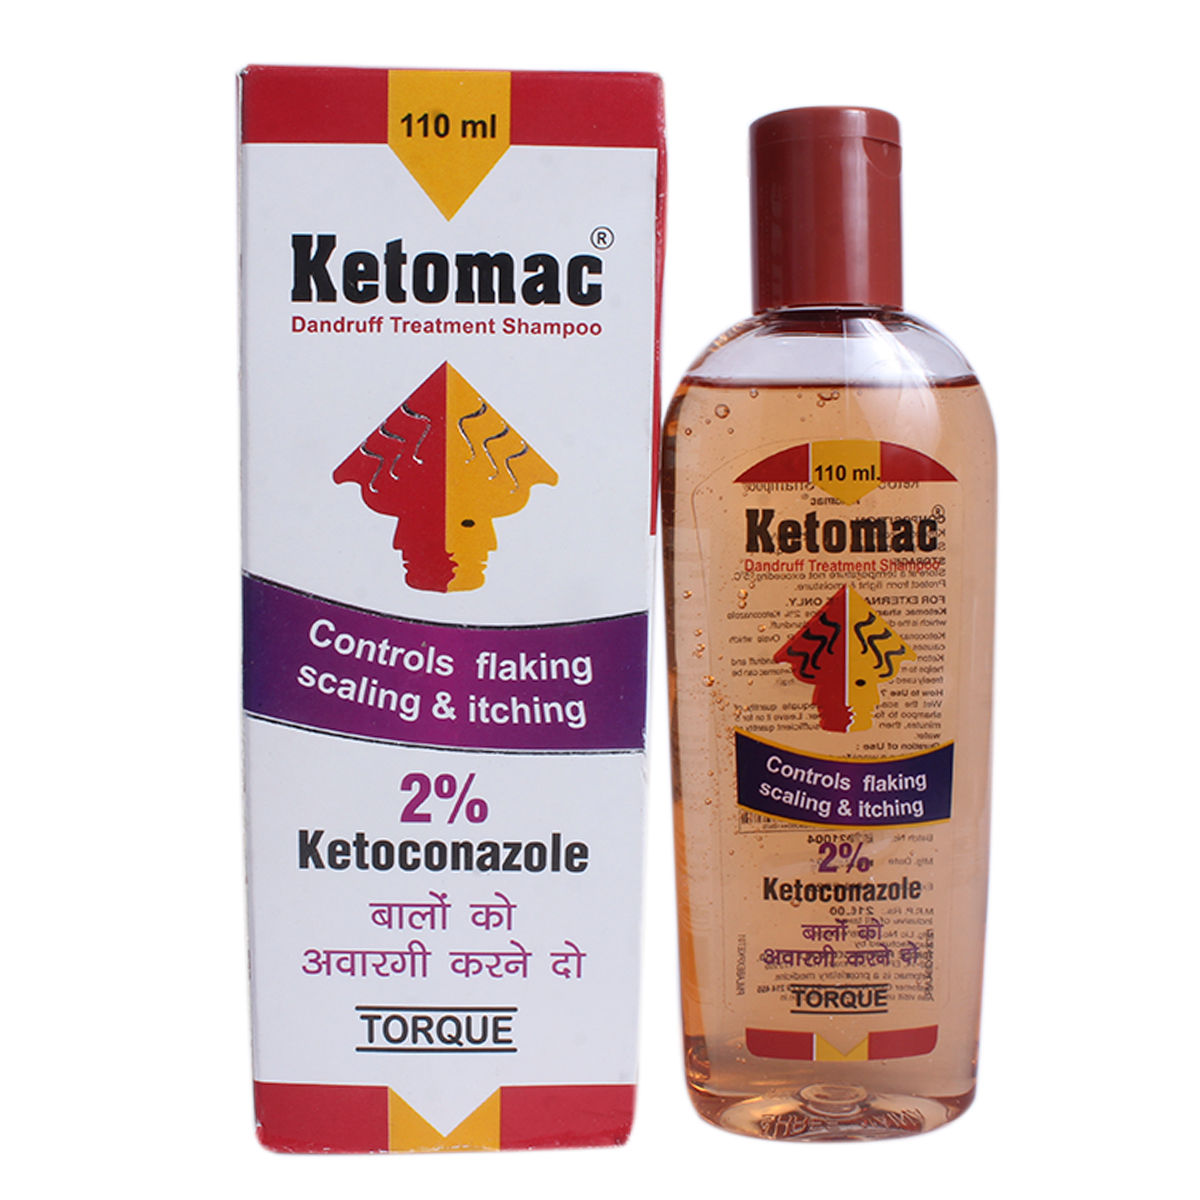 Ketomac Dandruff Treatment Shampoo, 110 ml Price, Uses, Side Effects,  Composition - Apollo Pharmacy